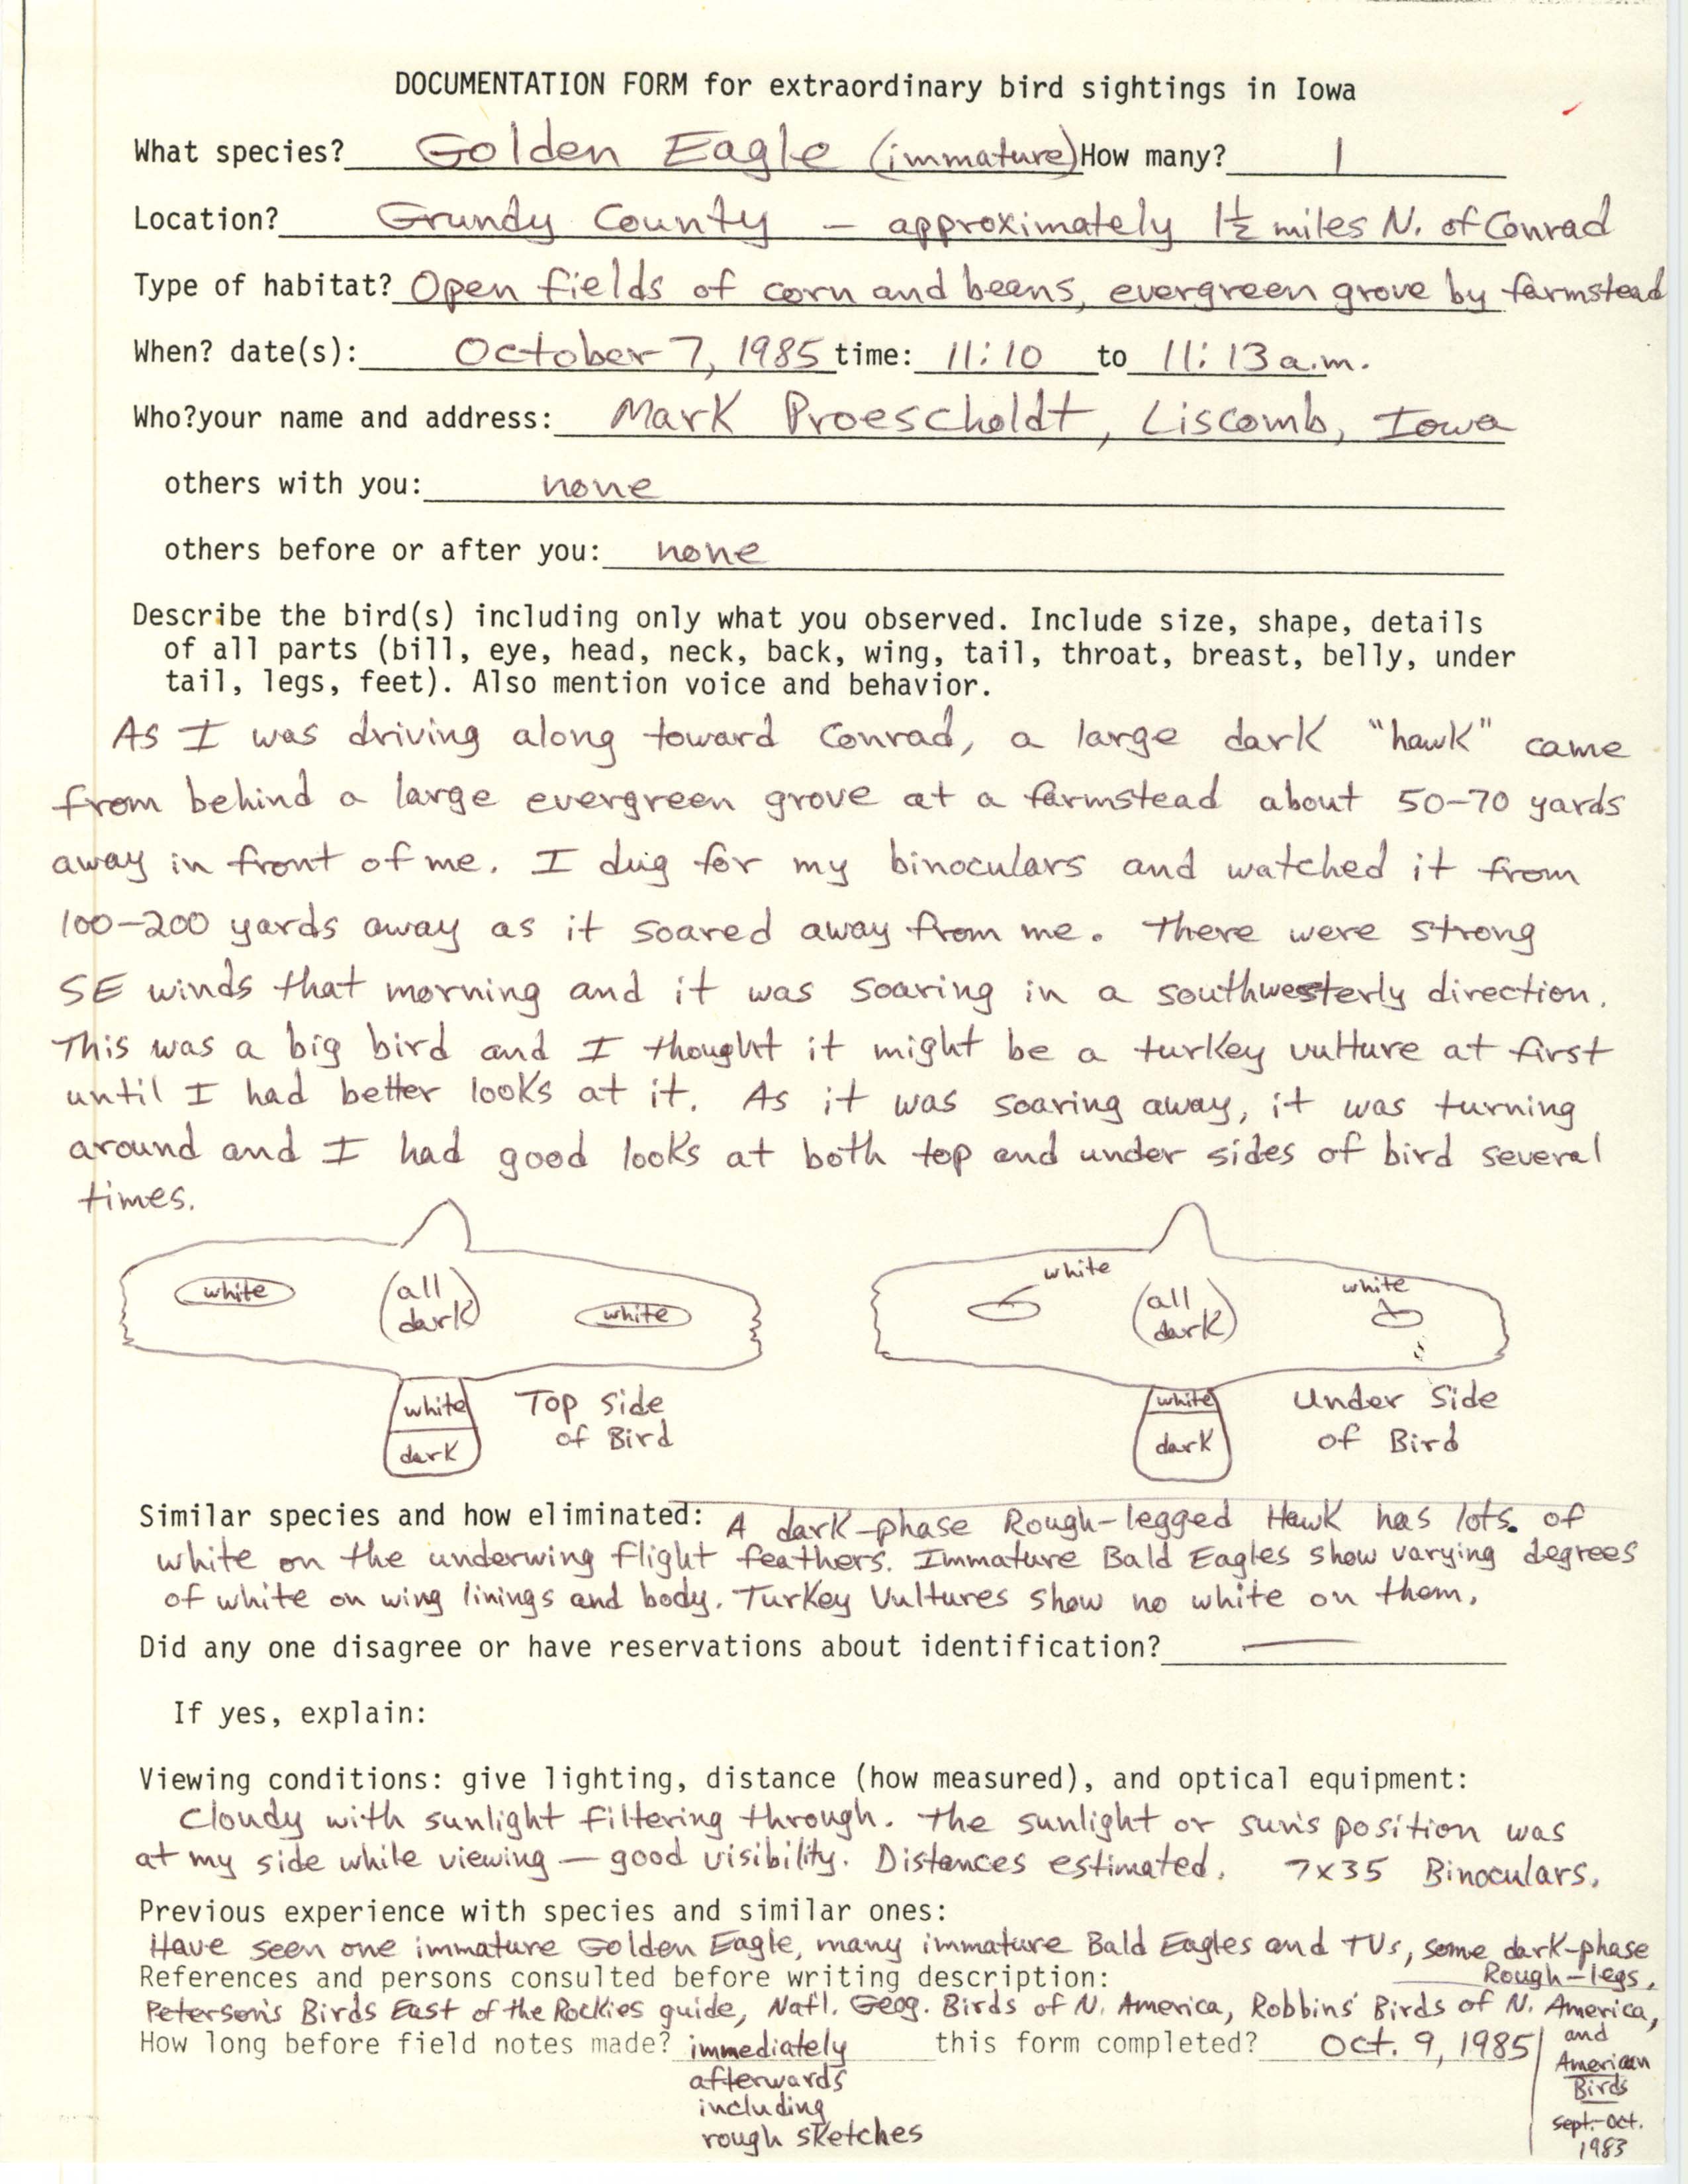 Rare bird documentation form for Golden Eagle north of Conrad, 1985